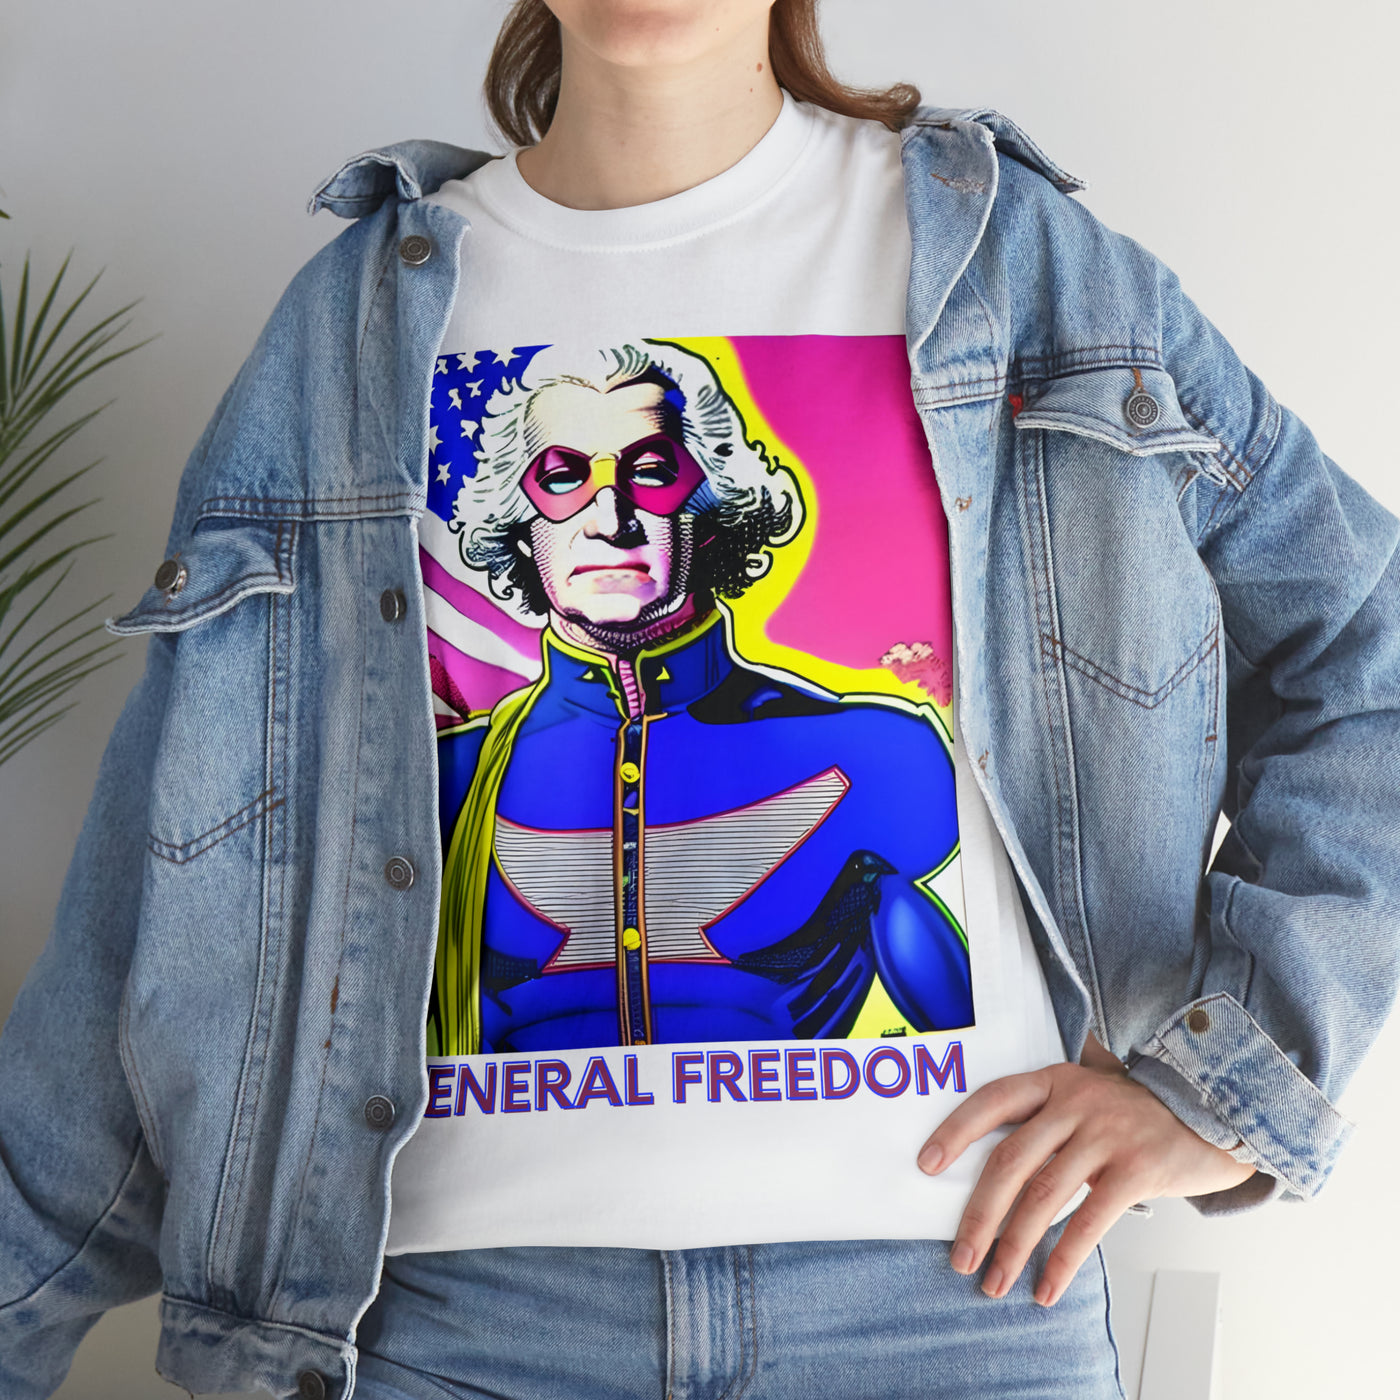 George Washington 'General Freedom' Patriotic Super Hero T-Shirt